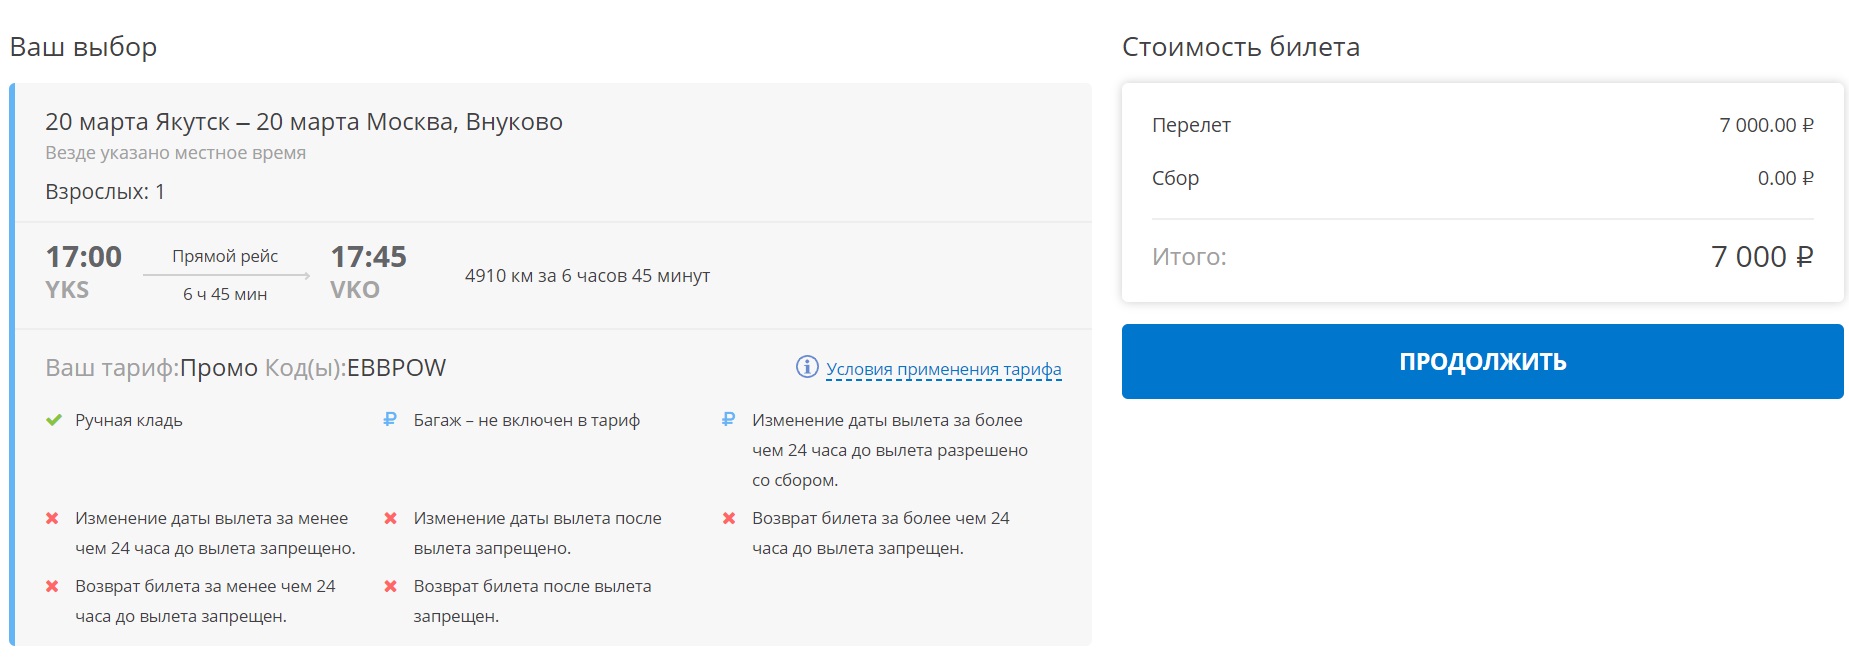 Цена авиабилета южно сахалинск сочи цена билета питер мурманск самолет